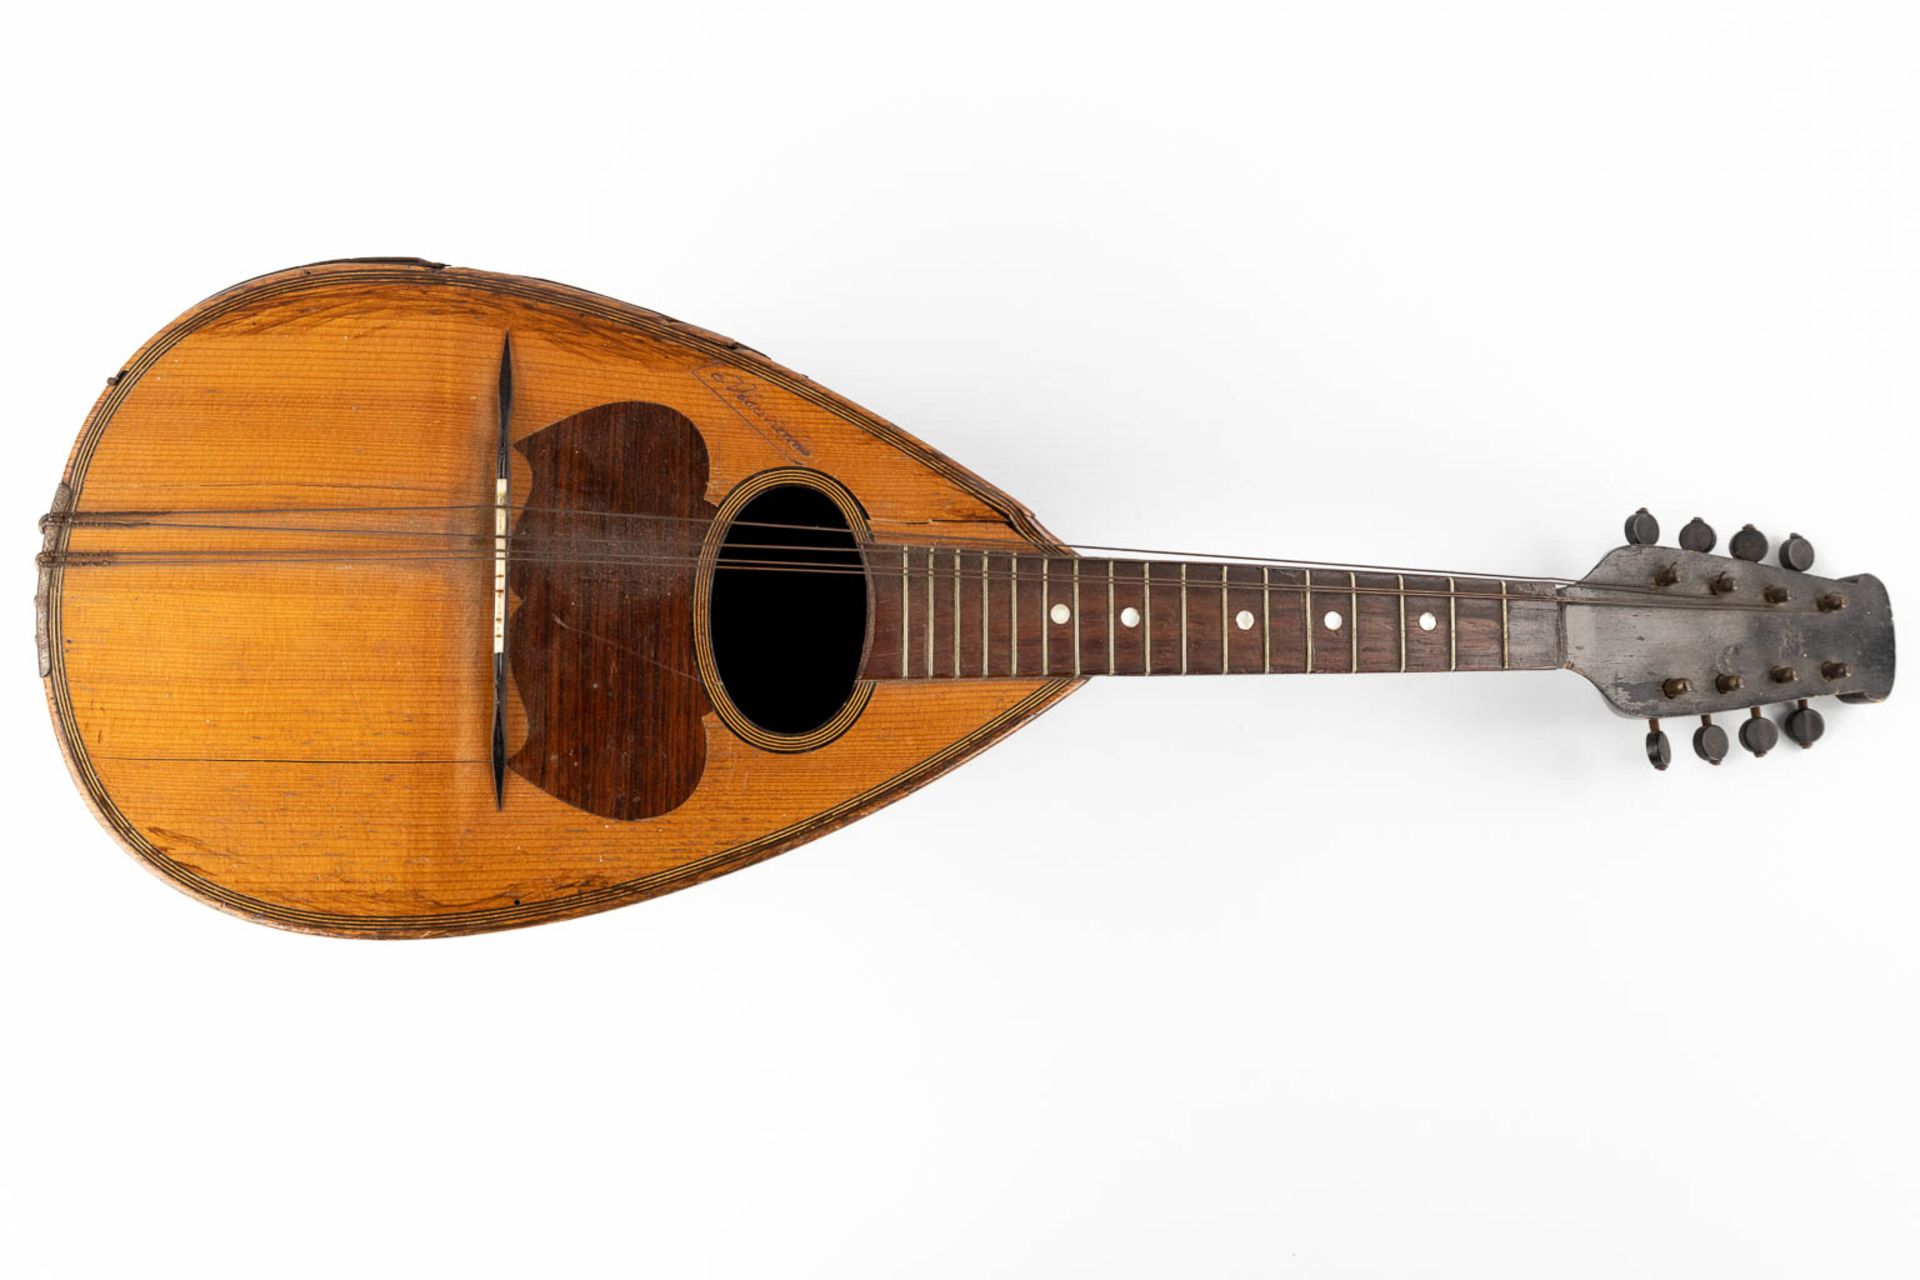 Three mandolines and a Balalaika. 20th C. (D:43 x W:67 x H:12 cm) - Image 20 of 36